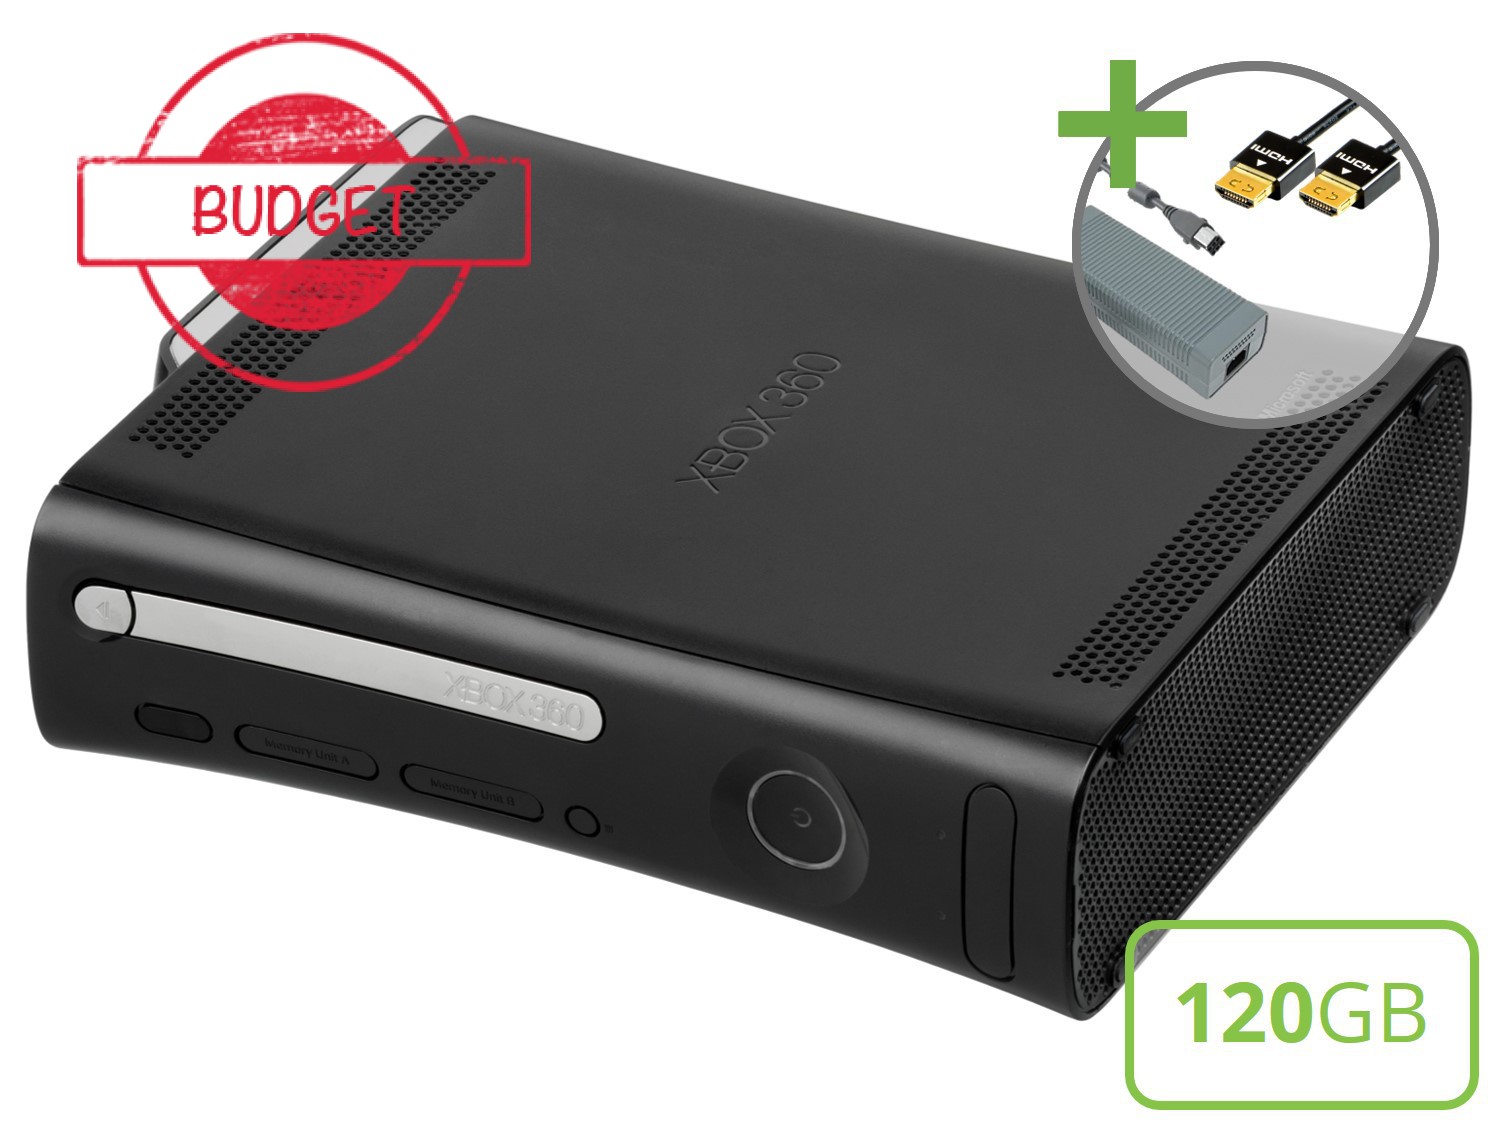 Microsoft Xbox 360 Elite Starter Pack - Forza Motorsport 3 Edition - Budget - Xbox 360 Hardware - 2